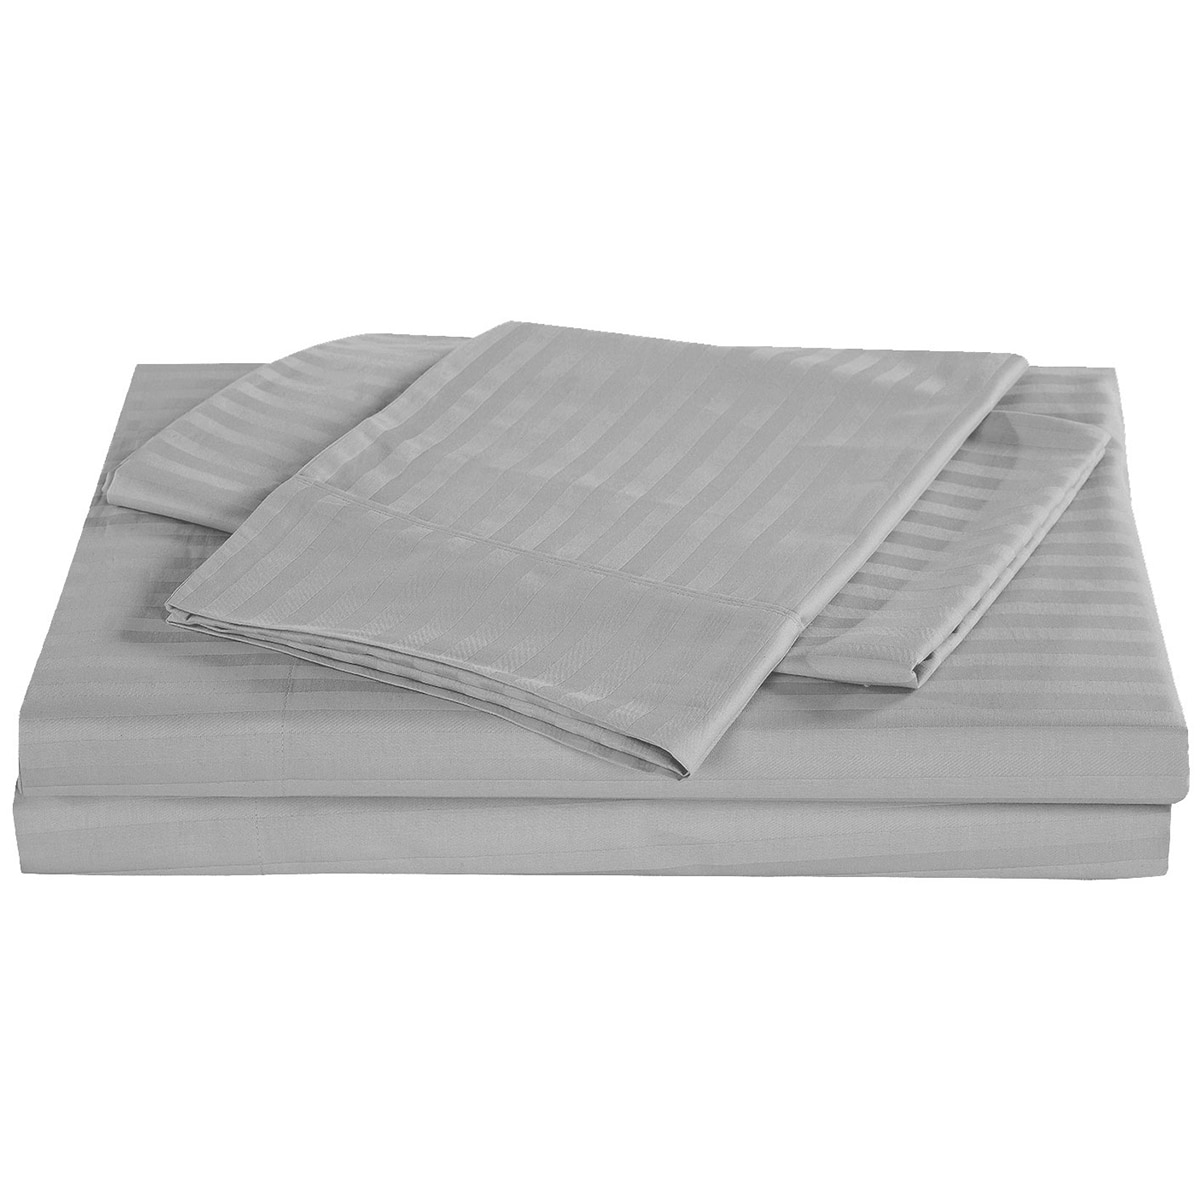 Bdirect Kensington 1200TC Cotton Sheet Set in Stripe - Double Silver Grey